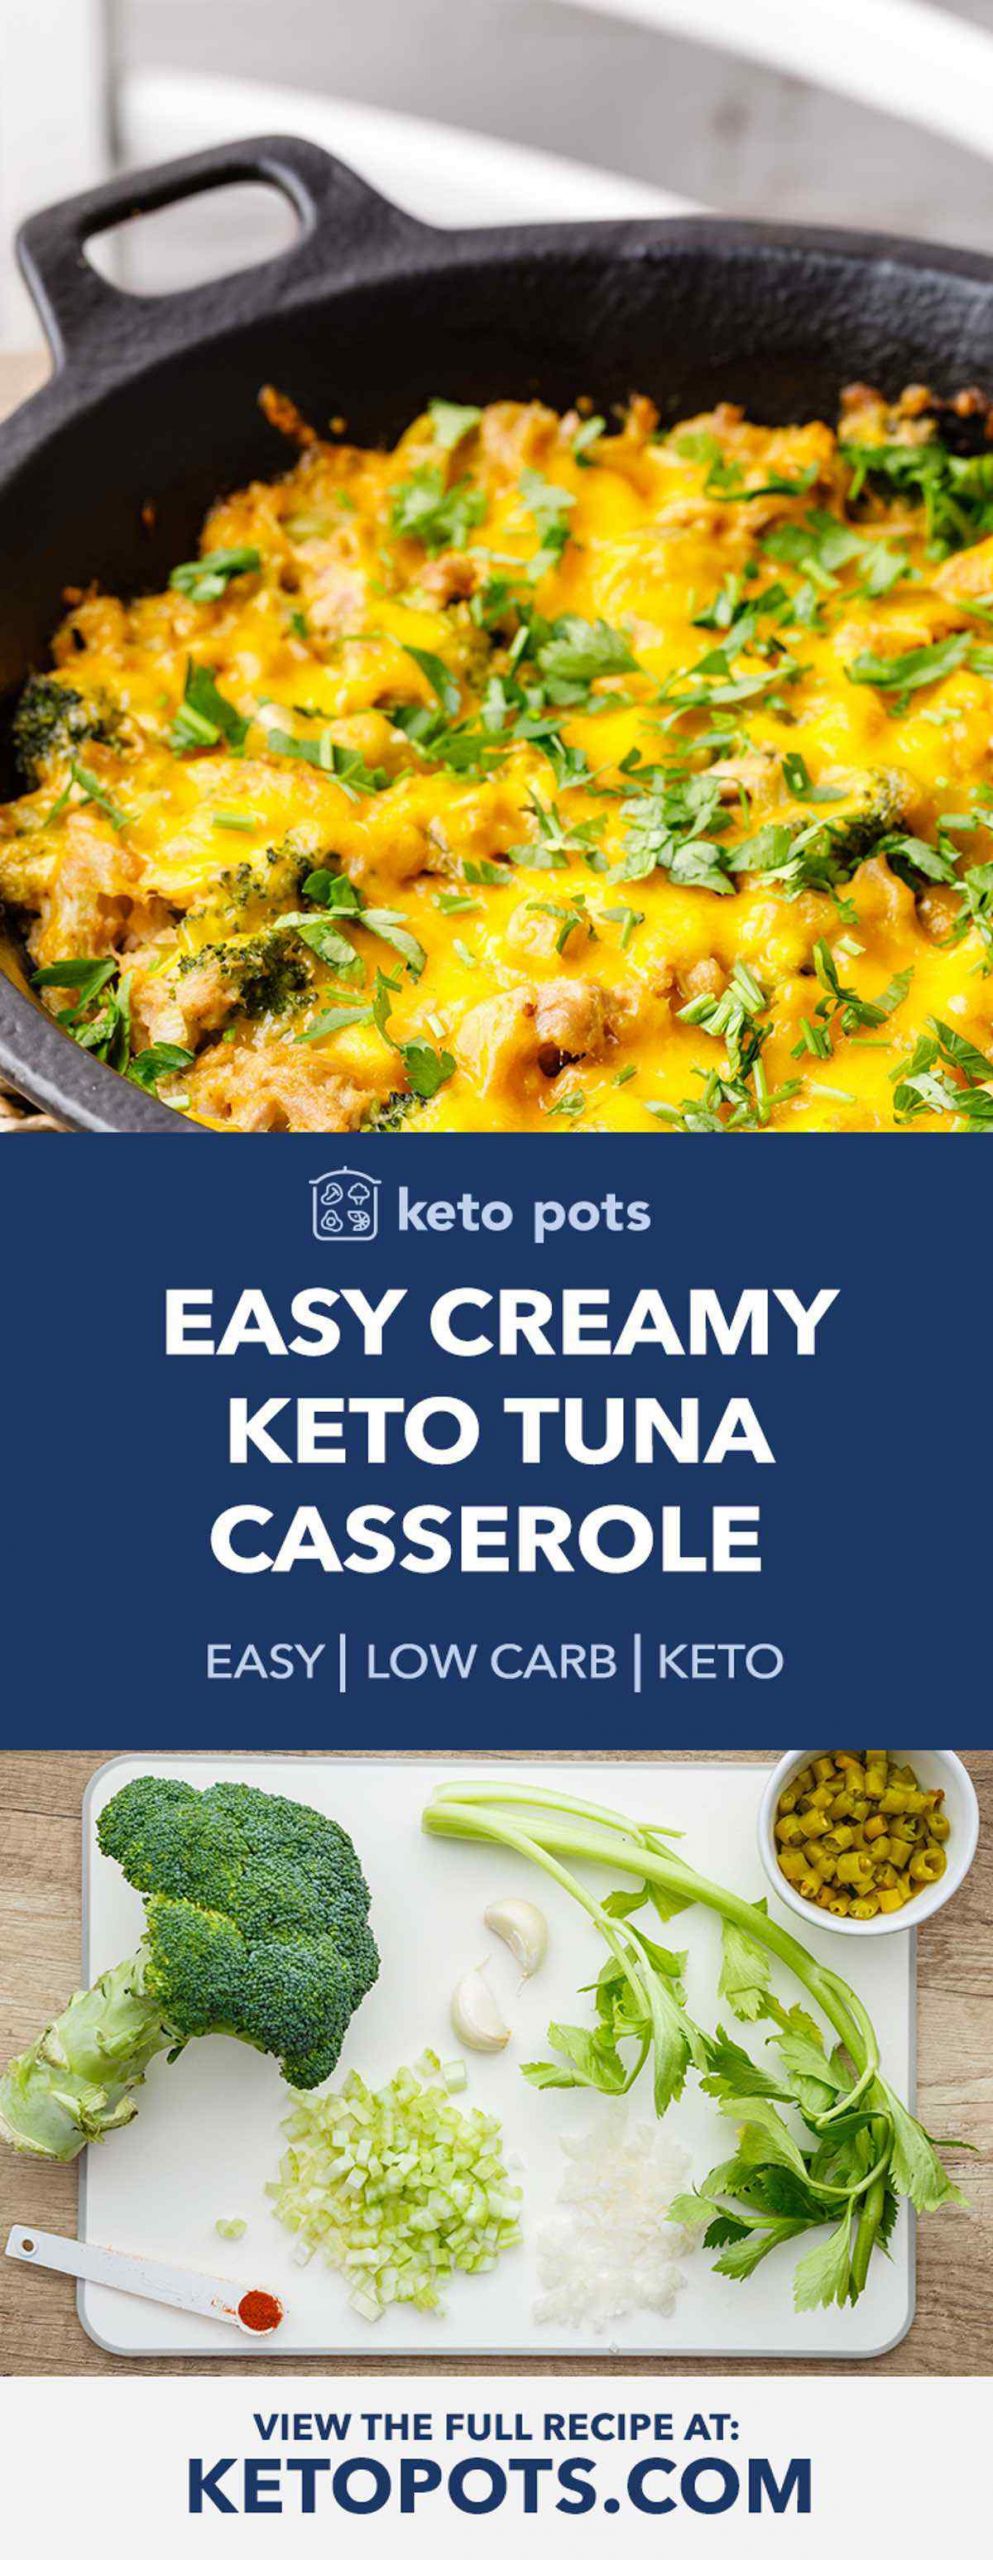 Tuna Keto Recipes
 Easy Creamy Keto Tuna Casserole Try This Family Favorite